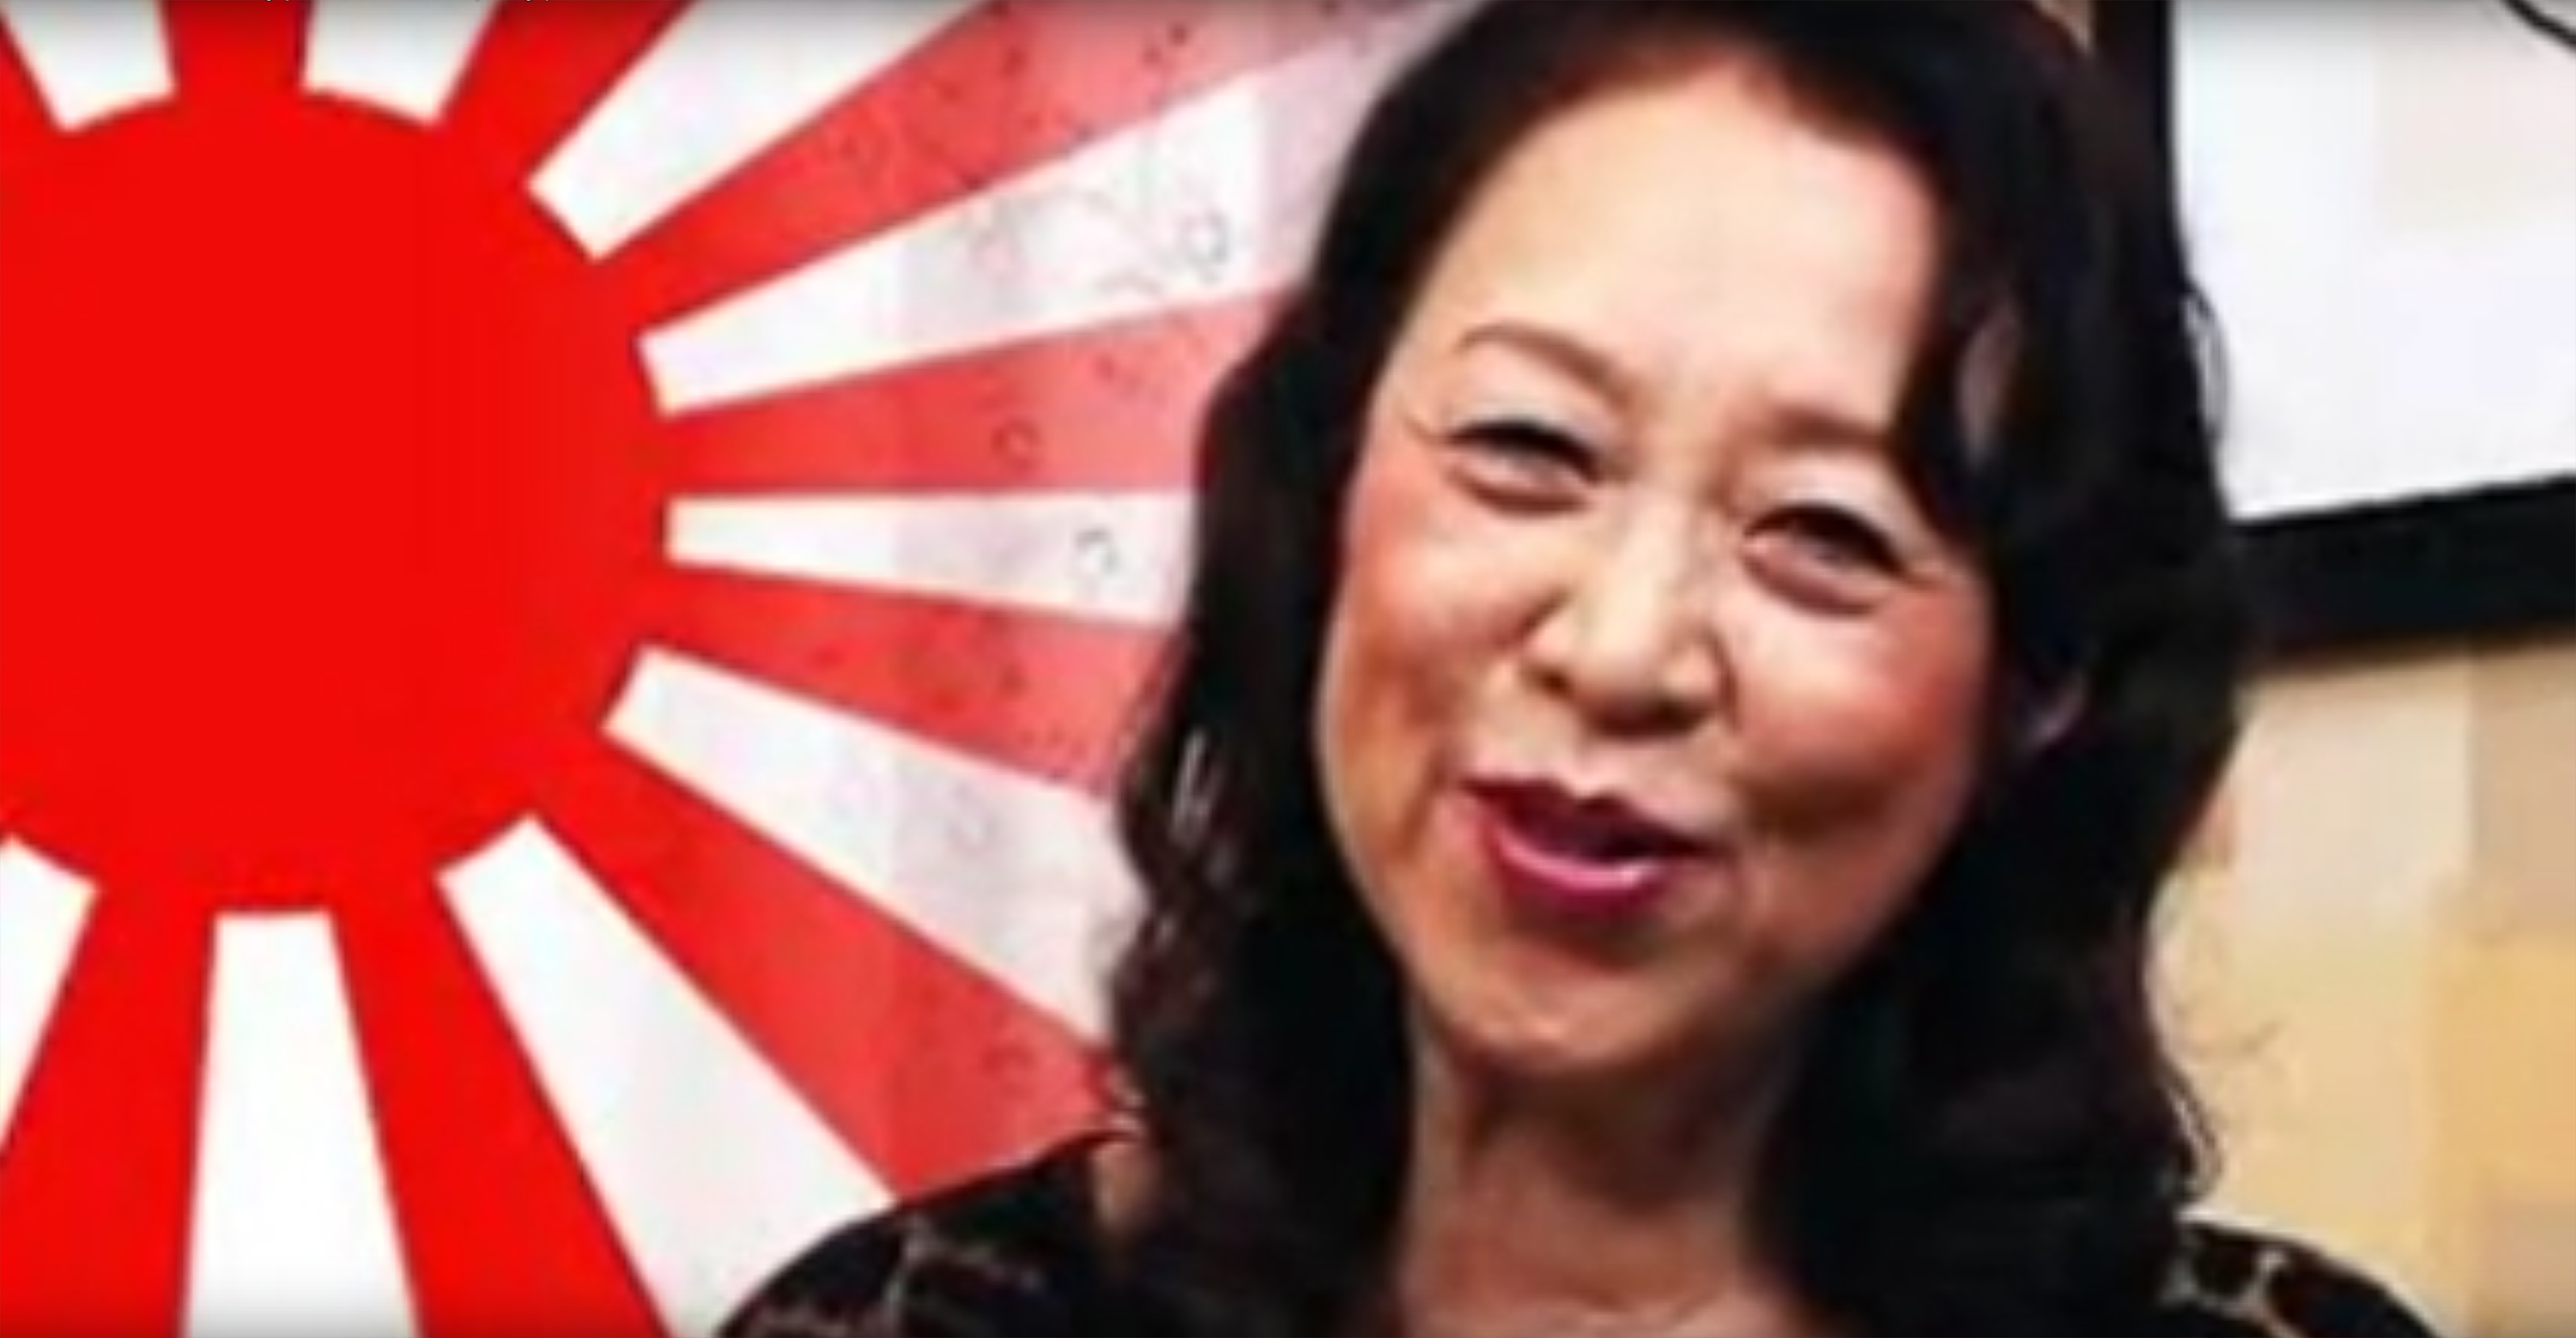 Maori Tezuka Porn Star Xxx - Asia in 3 minutes: Japan's 80-year-old porn star quits, Indian ...